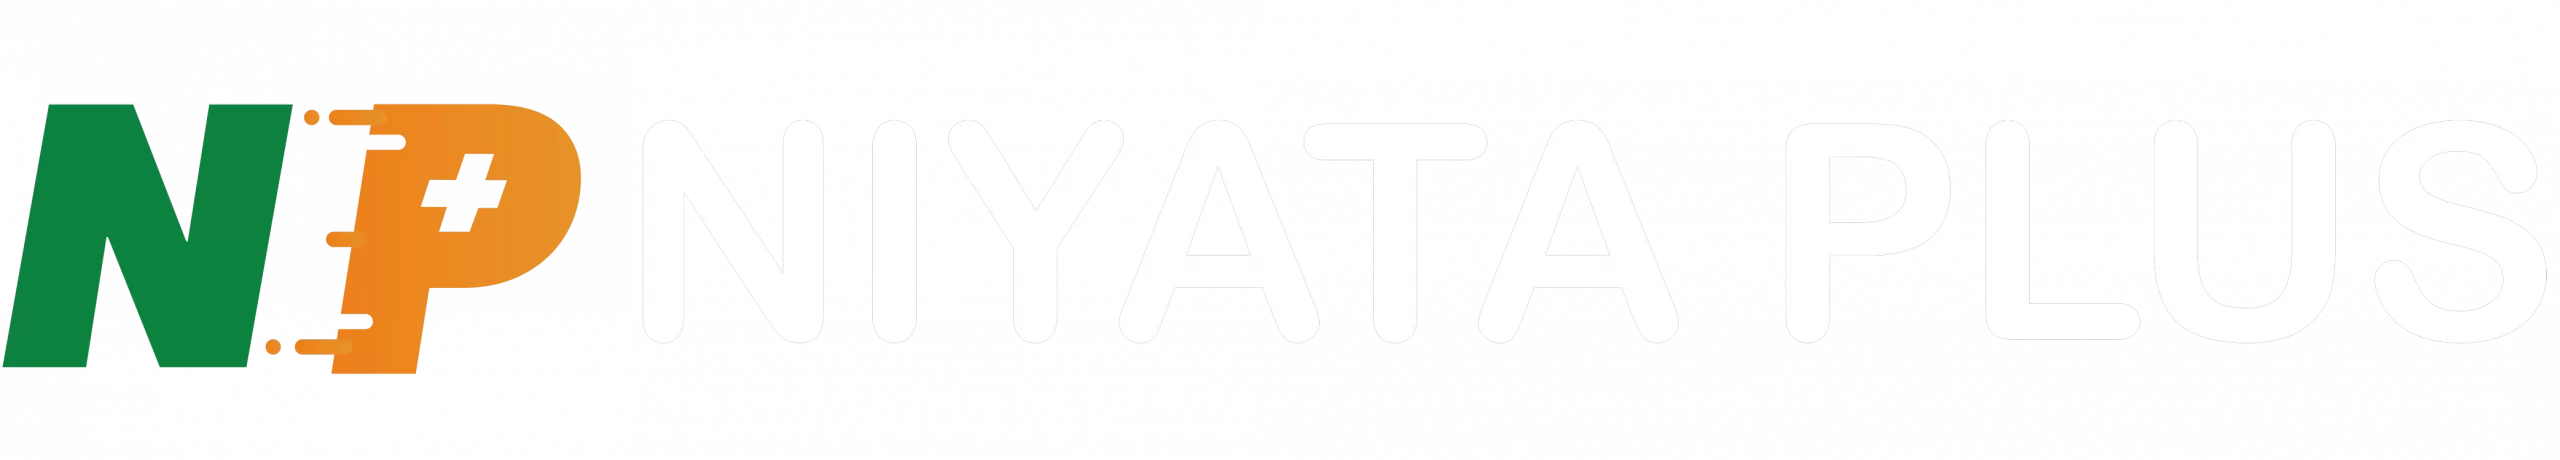 niyata-plus-logo-3